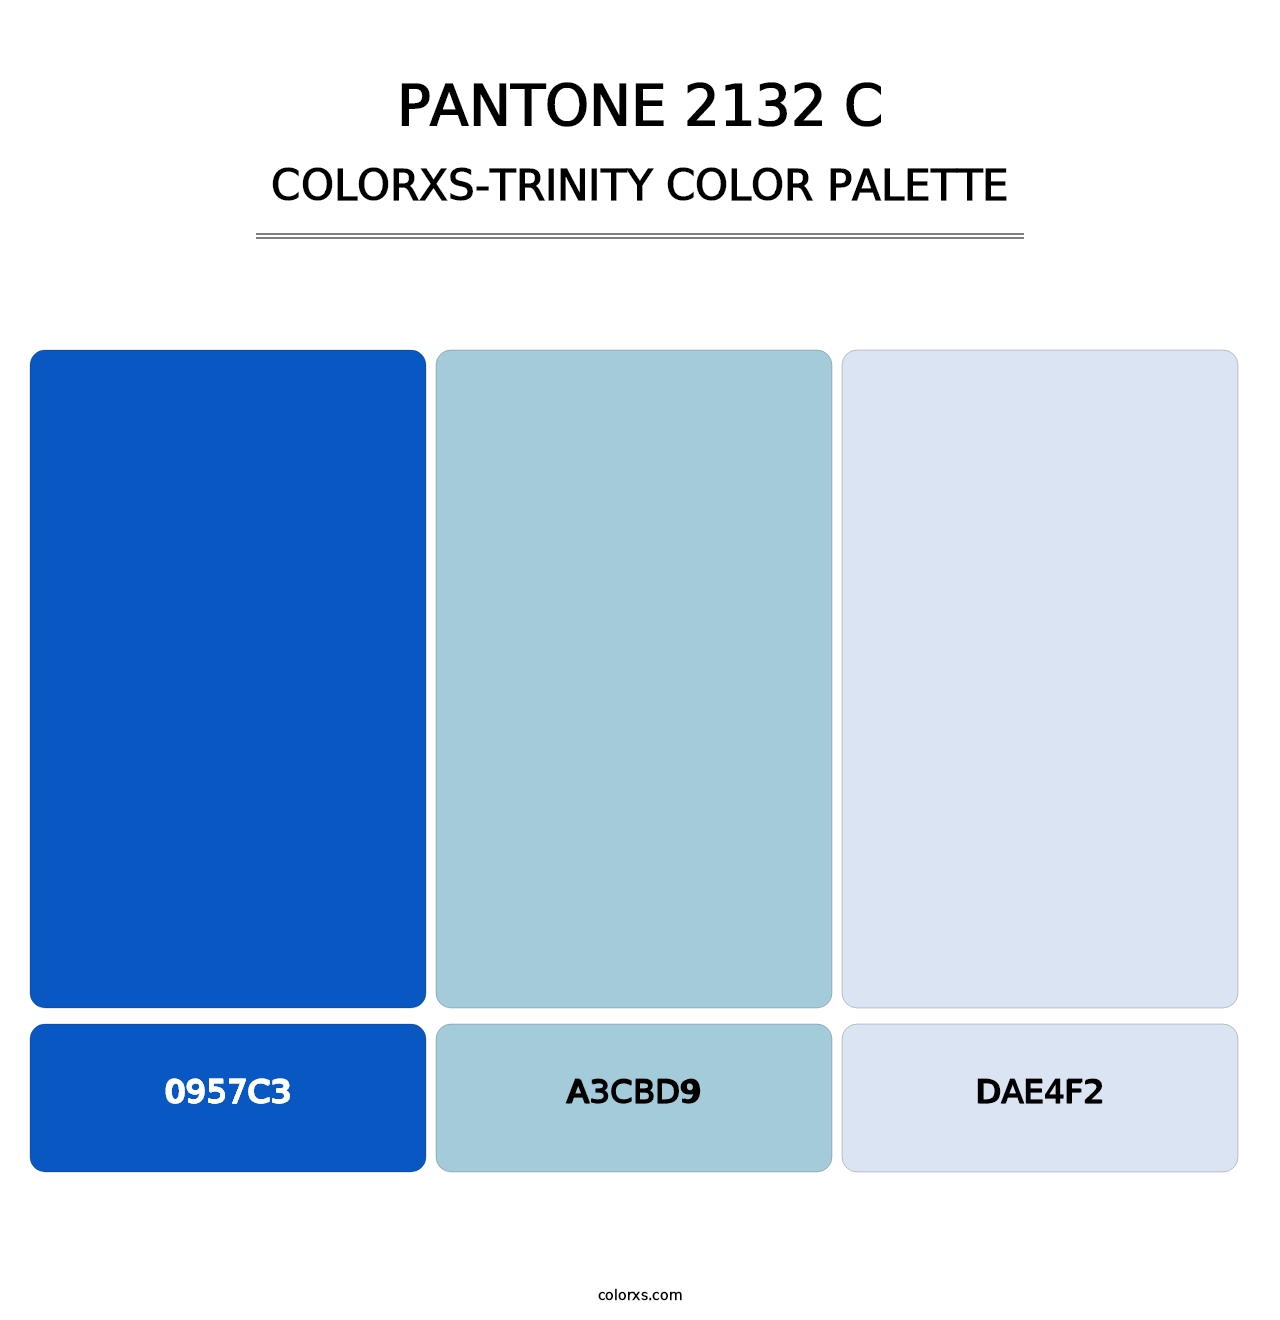 PANTONE 2132 C - Colorxs Trinity Palette